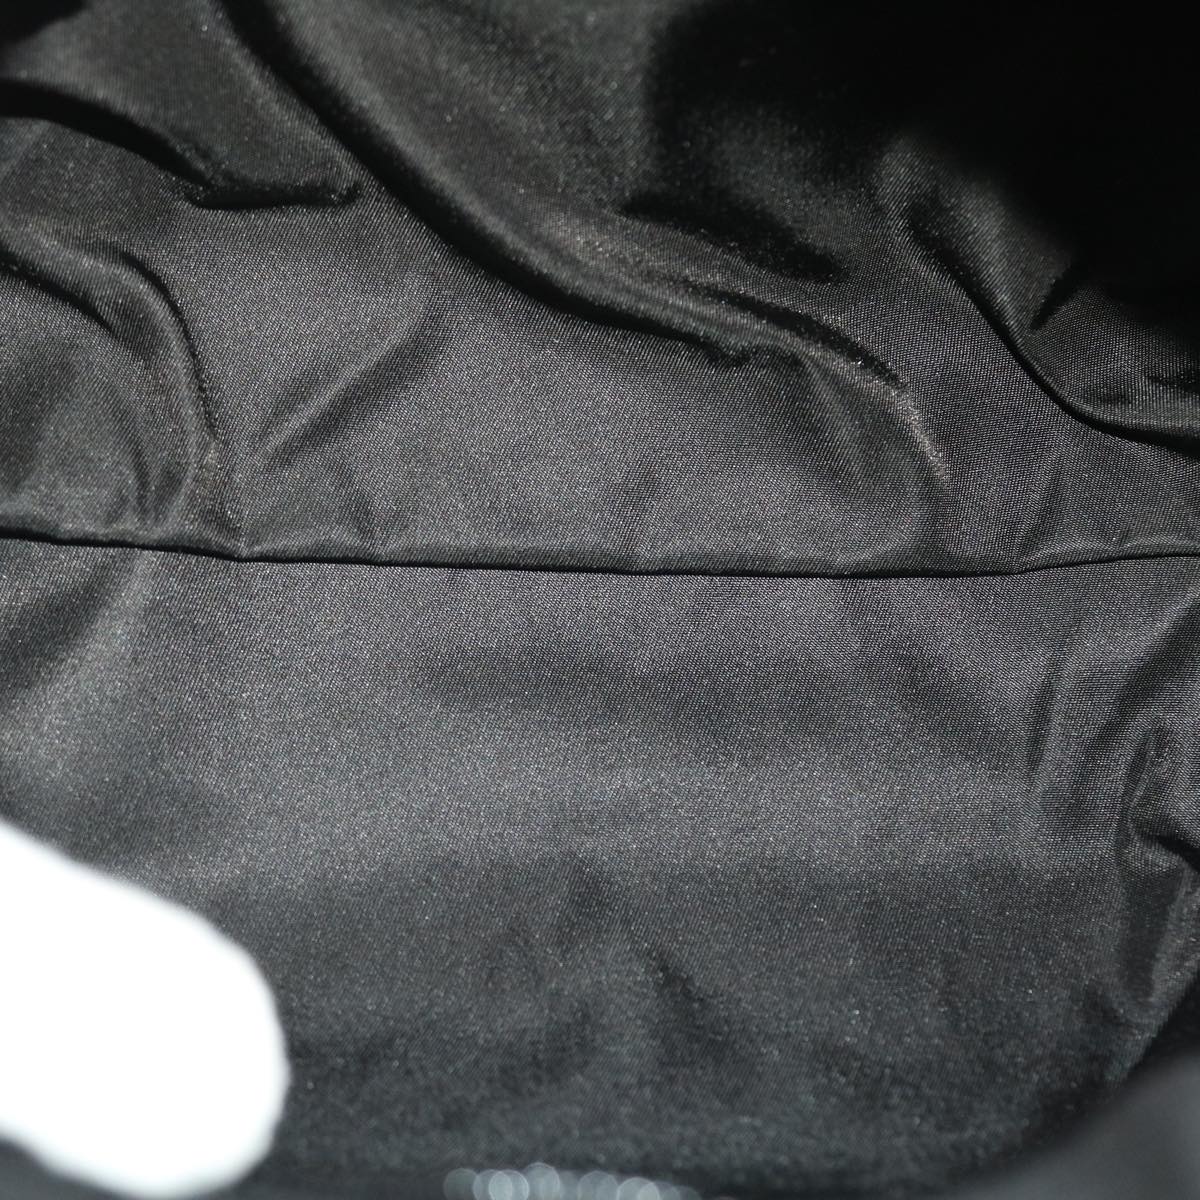 PRADA Hand Bag Nylon Black Auth 50260